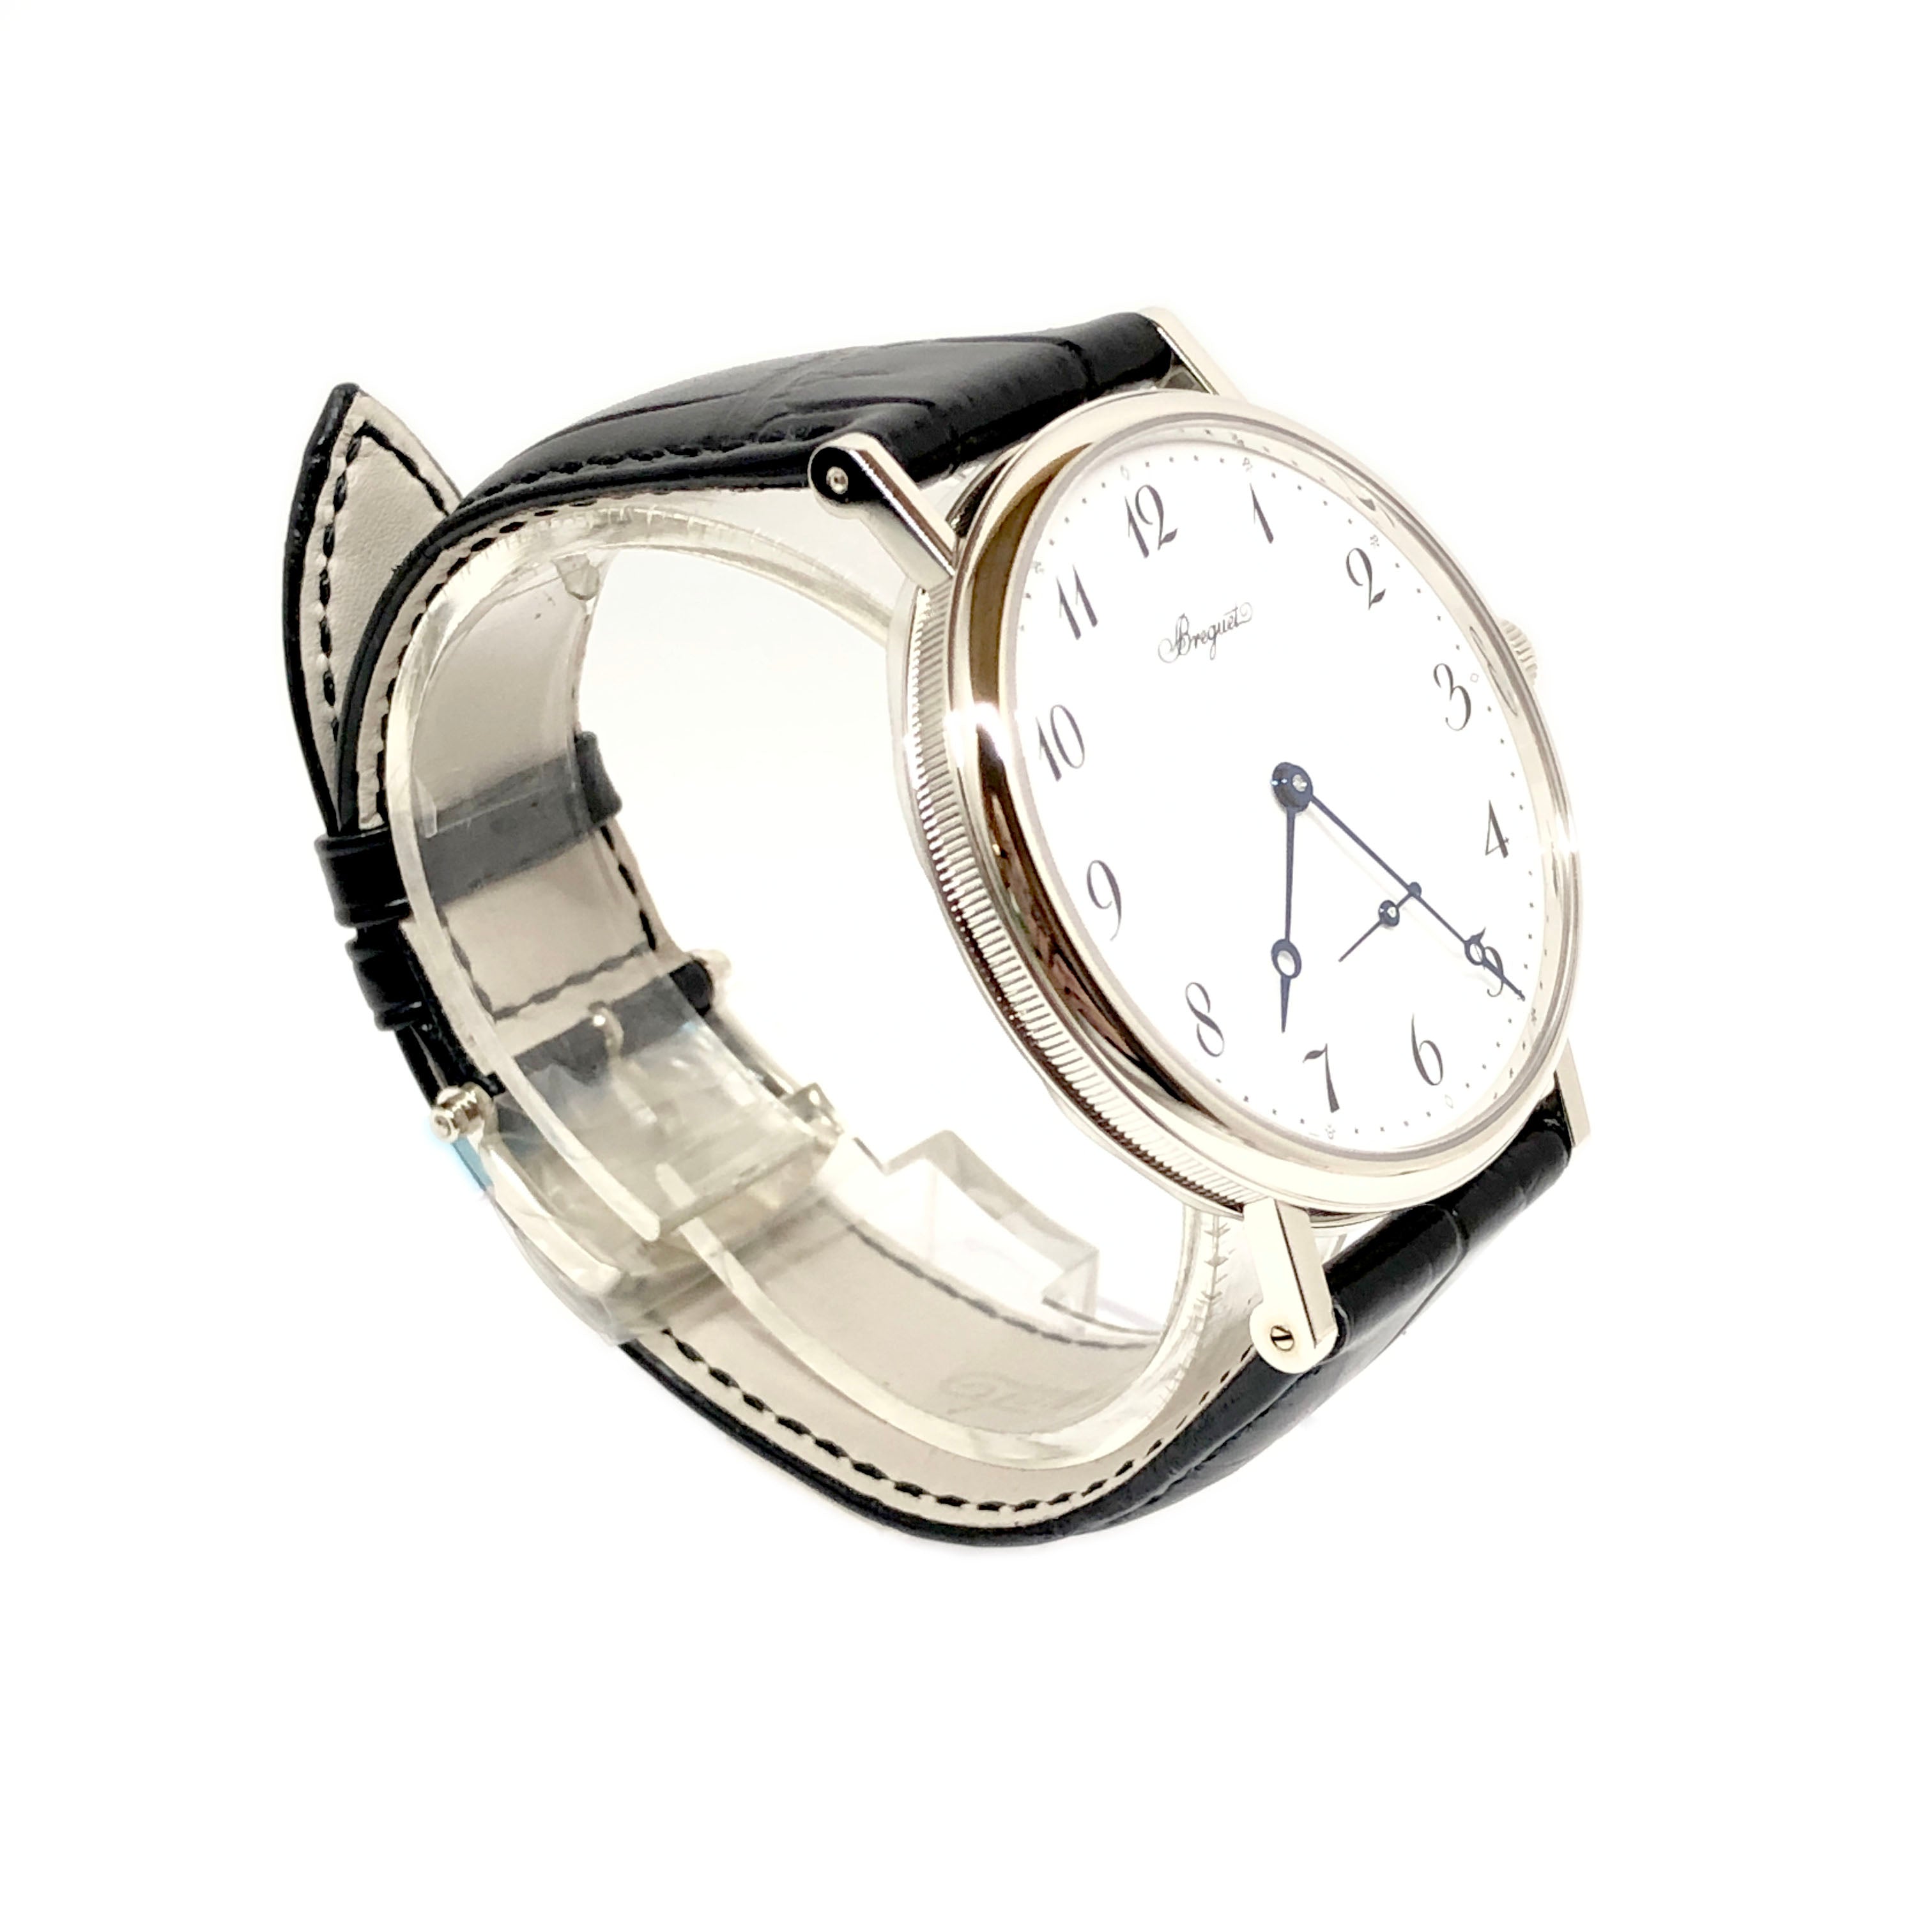 Breguet Classique 7147 18K White Gold Men's Watch